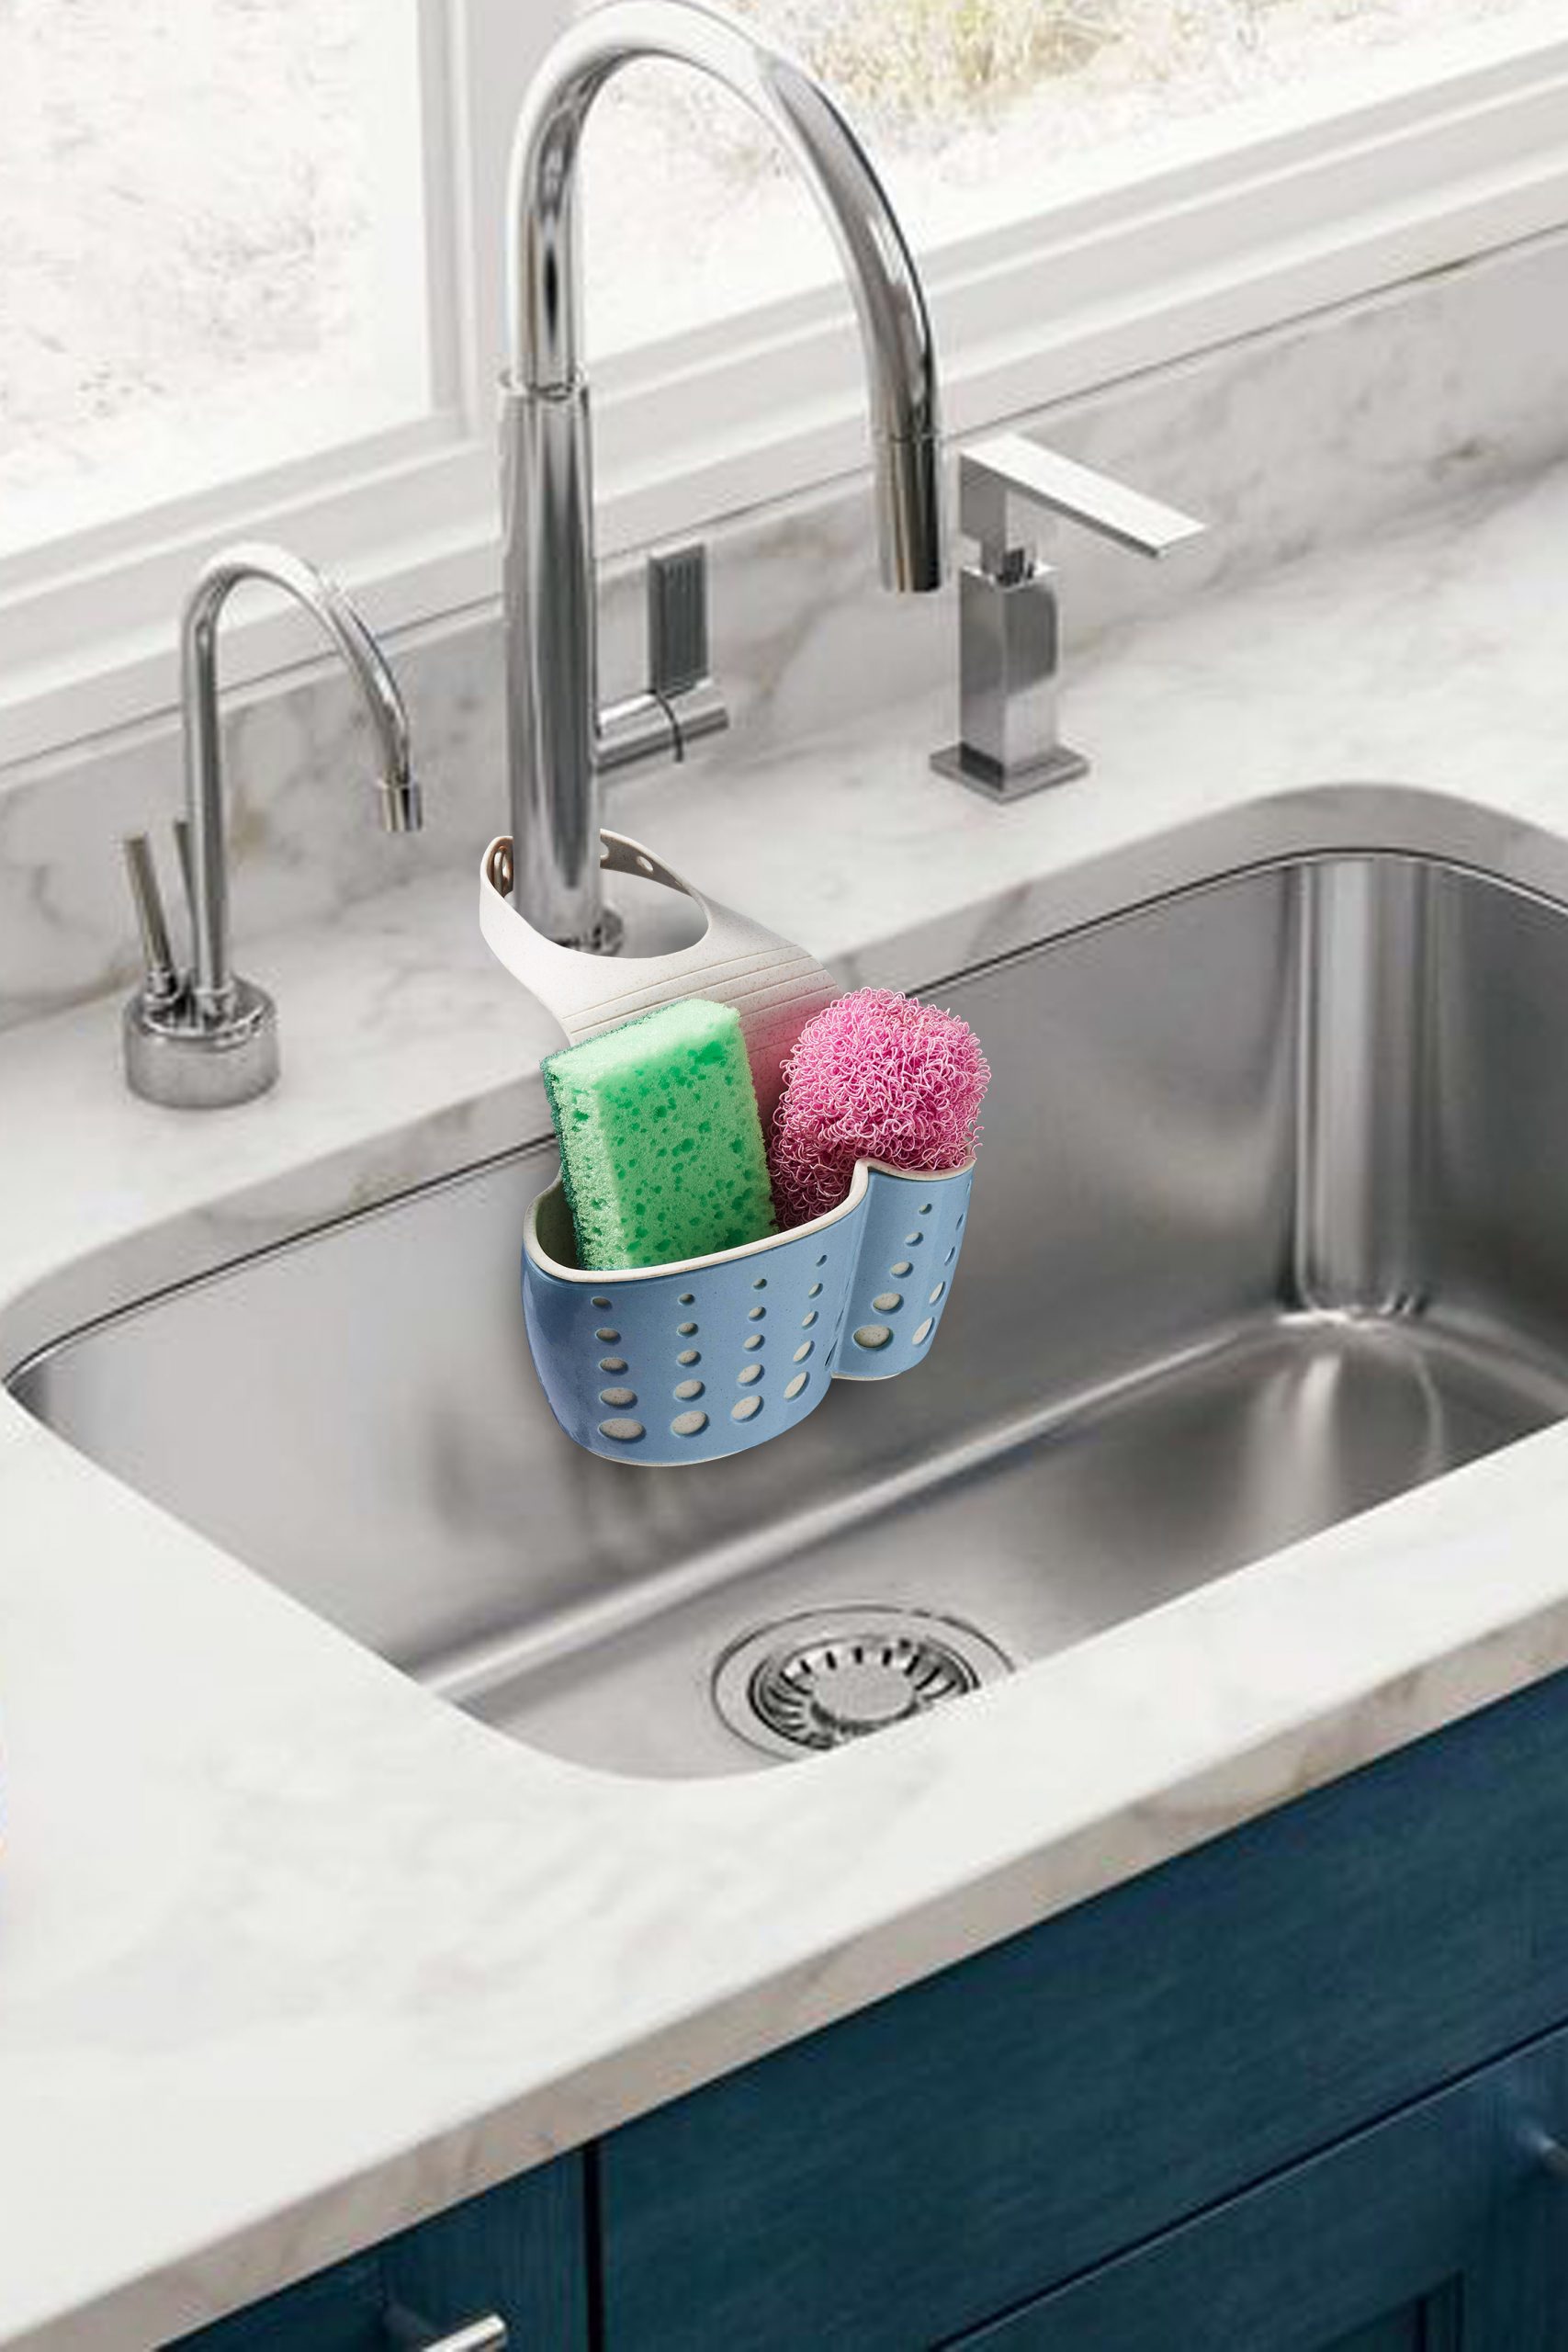  HULISEN Kitchen Sink Sponge Holder, 304 Stainless